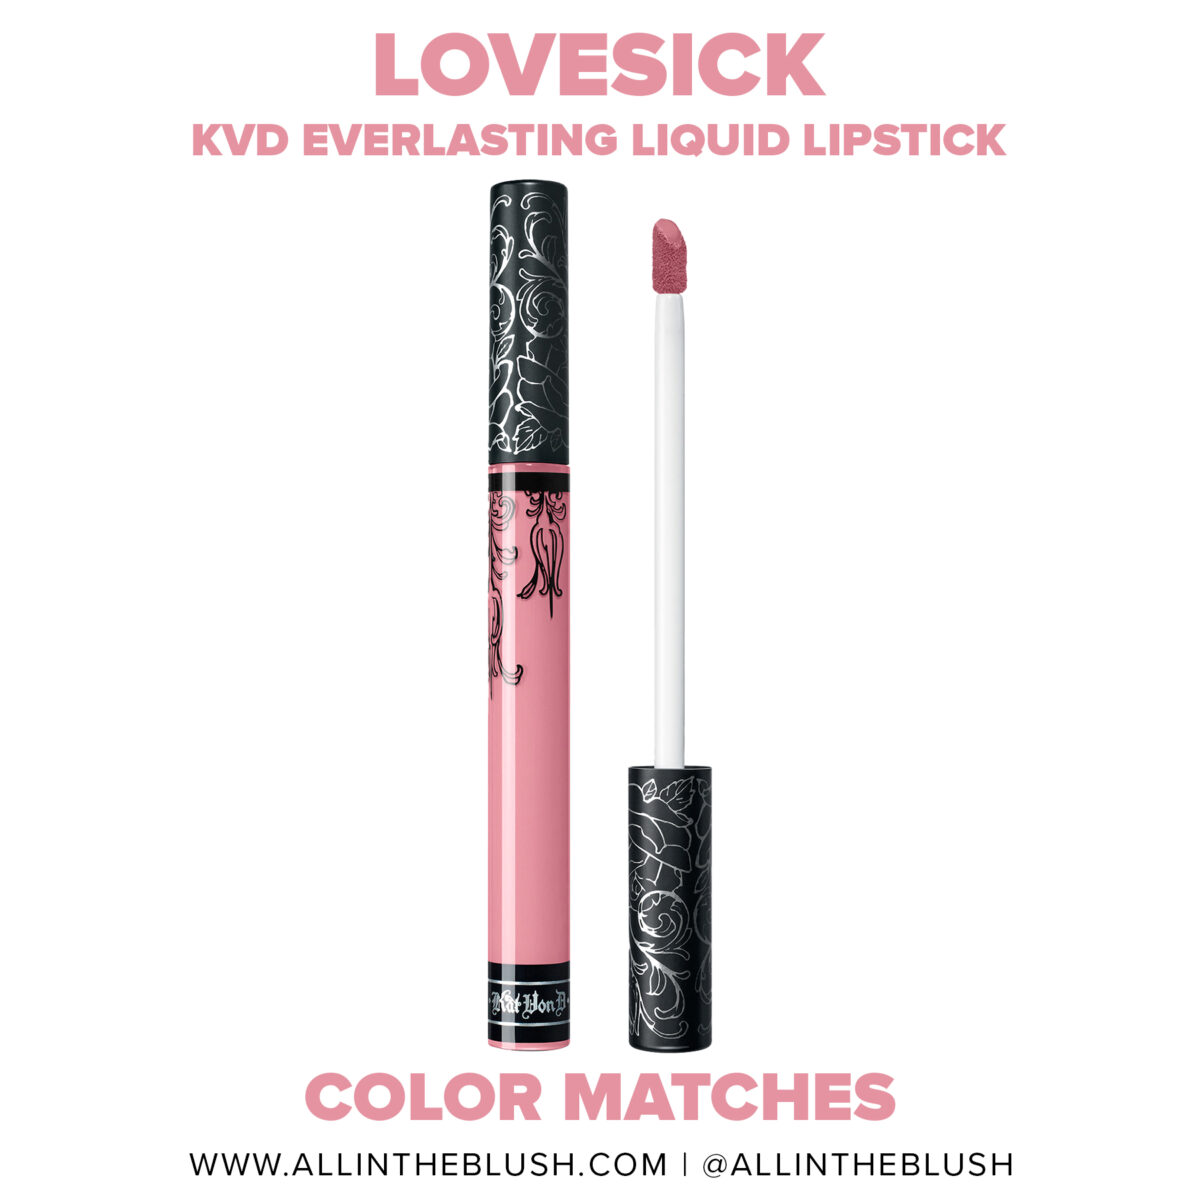 Kat Von D Lovesick Everlasting Liquid Lipstick Dupes